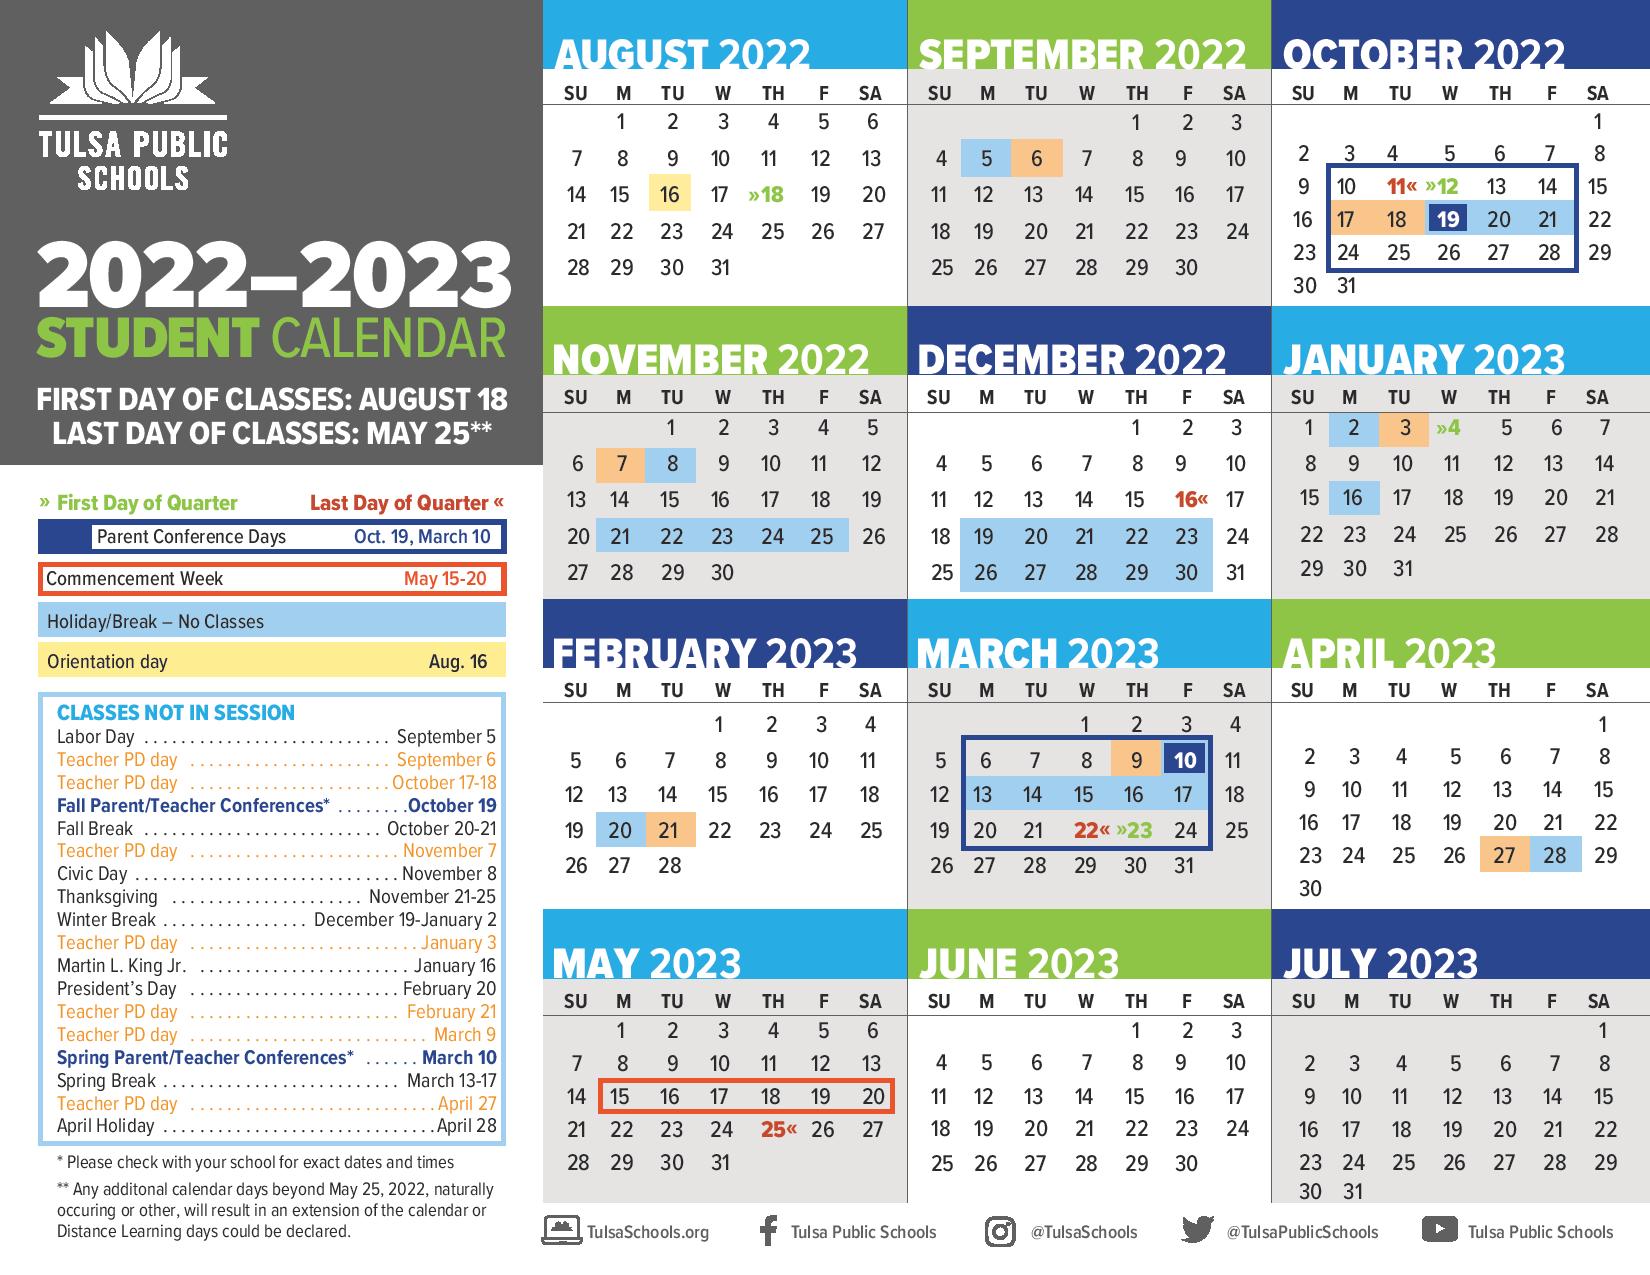 tulsa-public-schools-calendar-2023-with-holidays-school-calendar-info